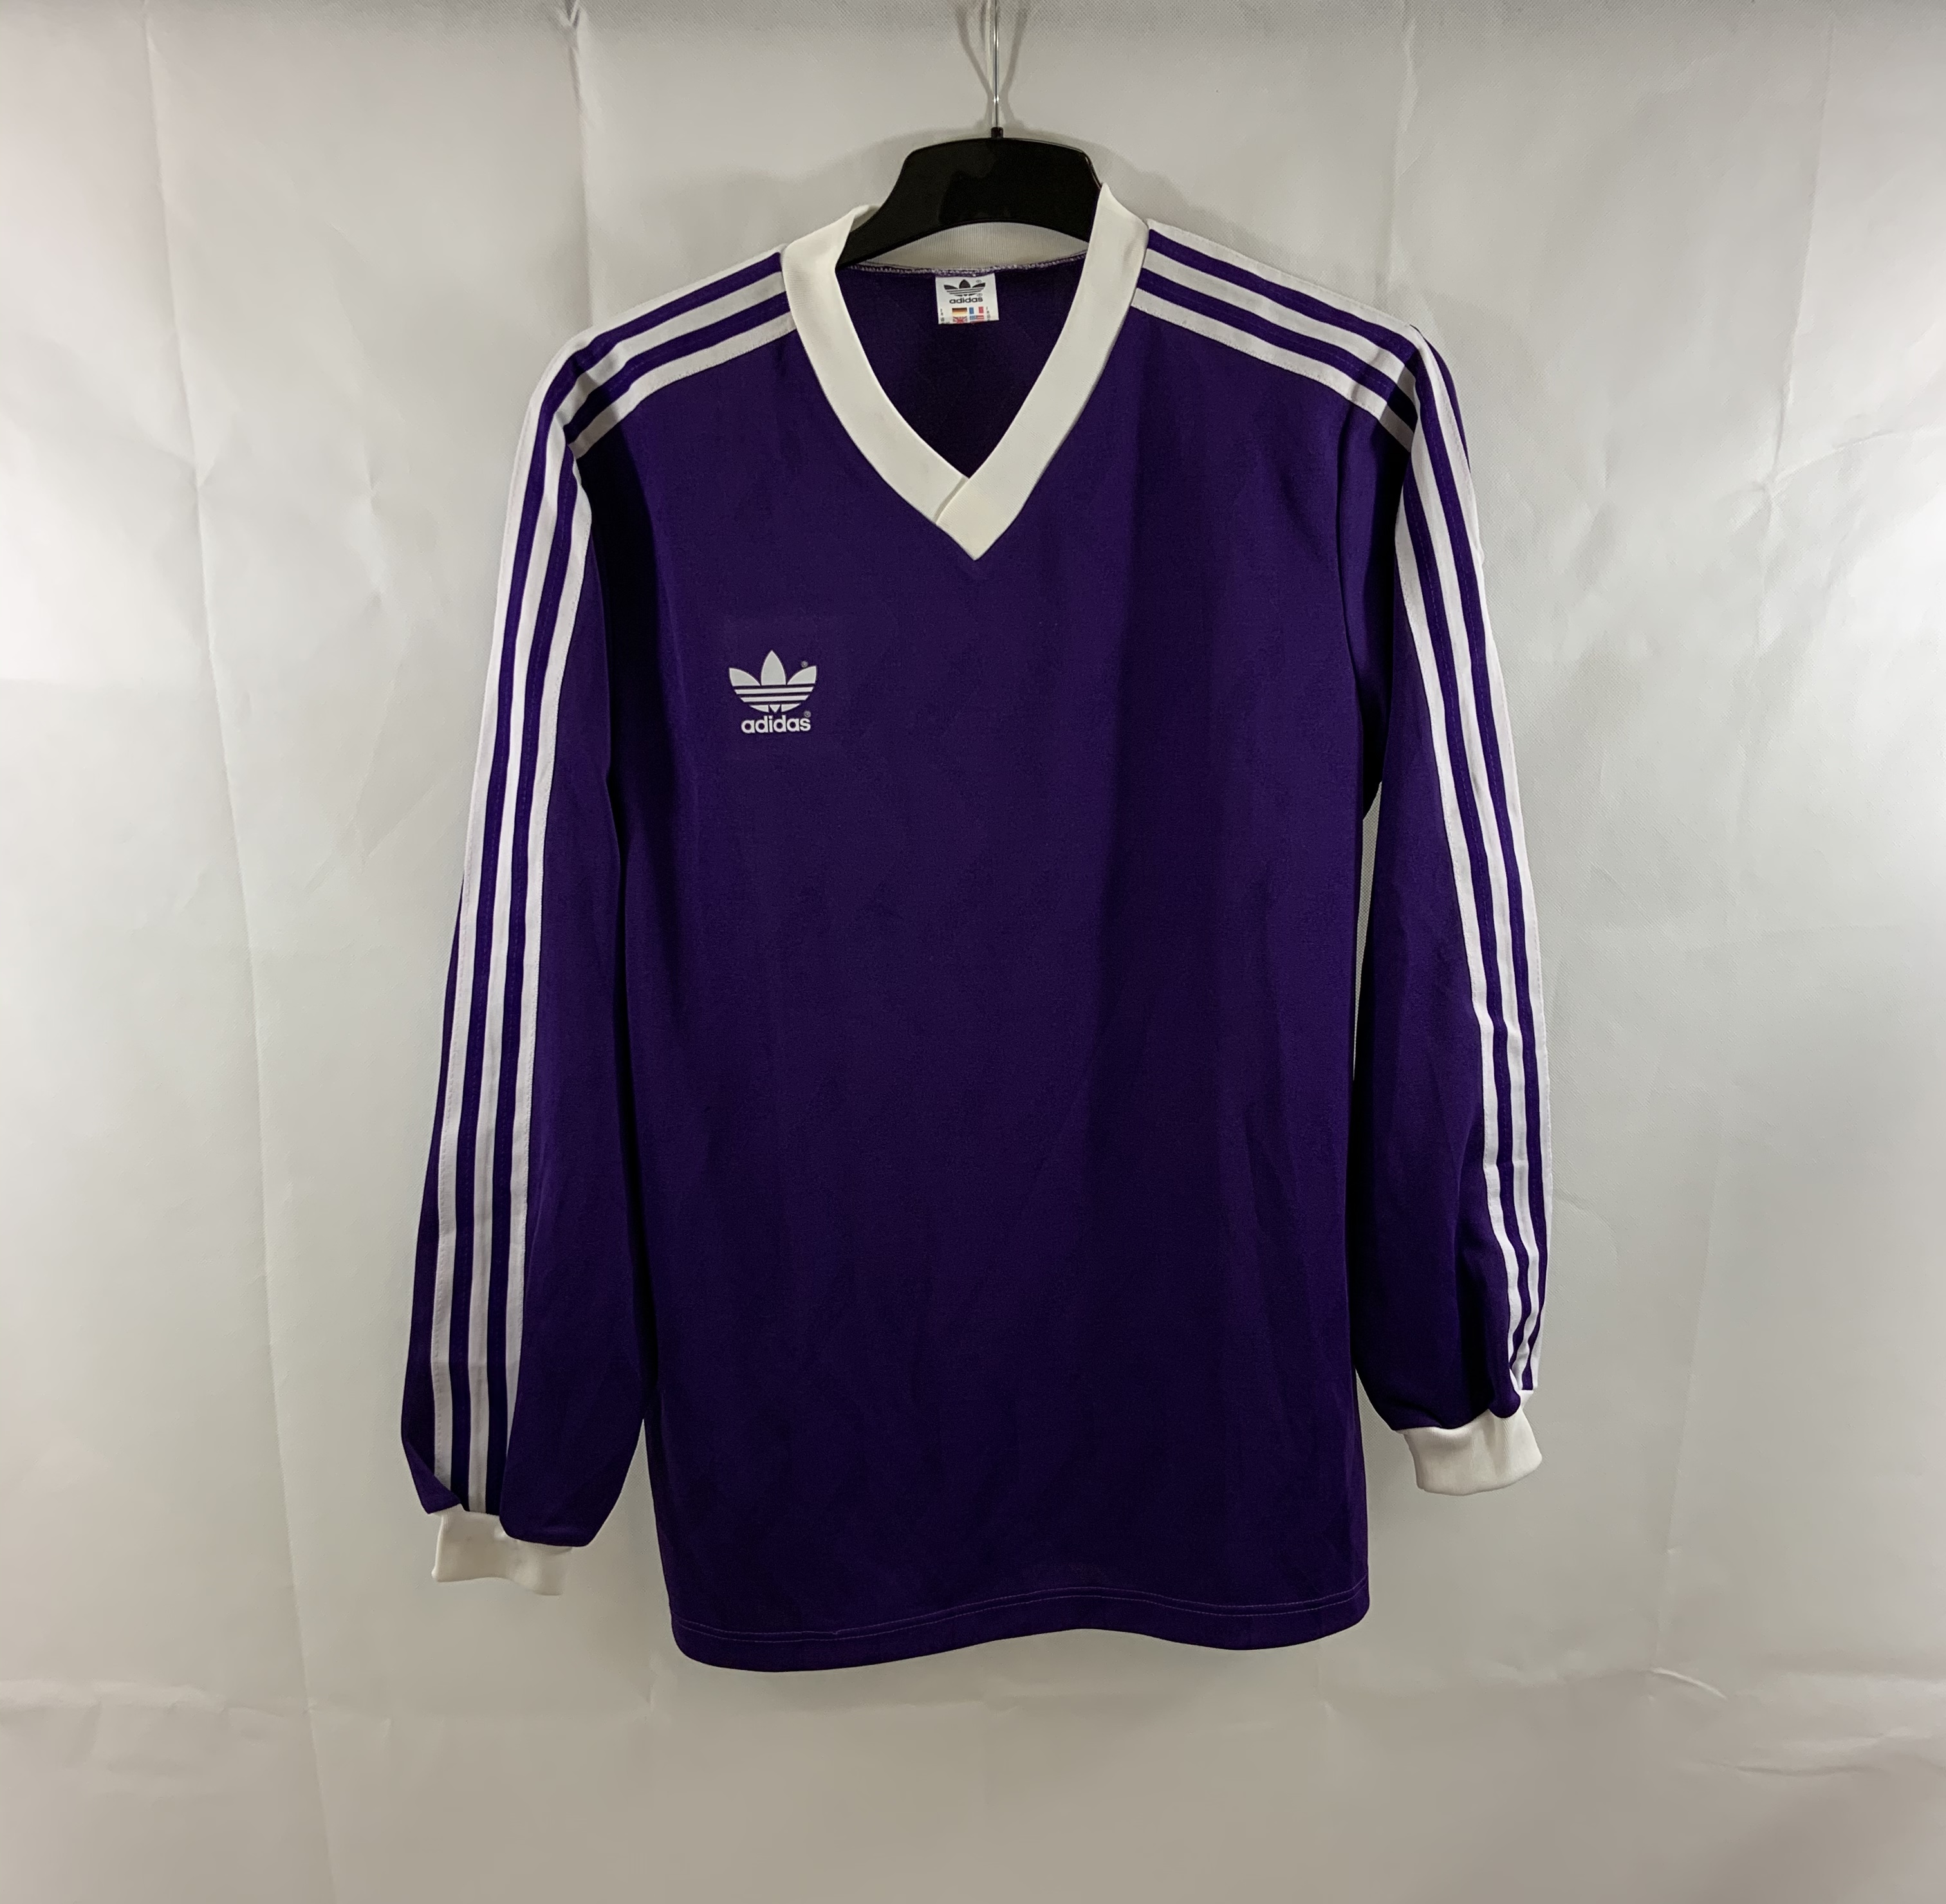 Fiorentina/Austria Wien L/S Adidas Template Football Shirt 1980’s ...